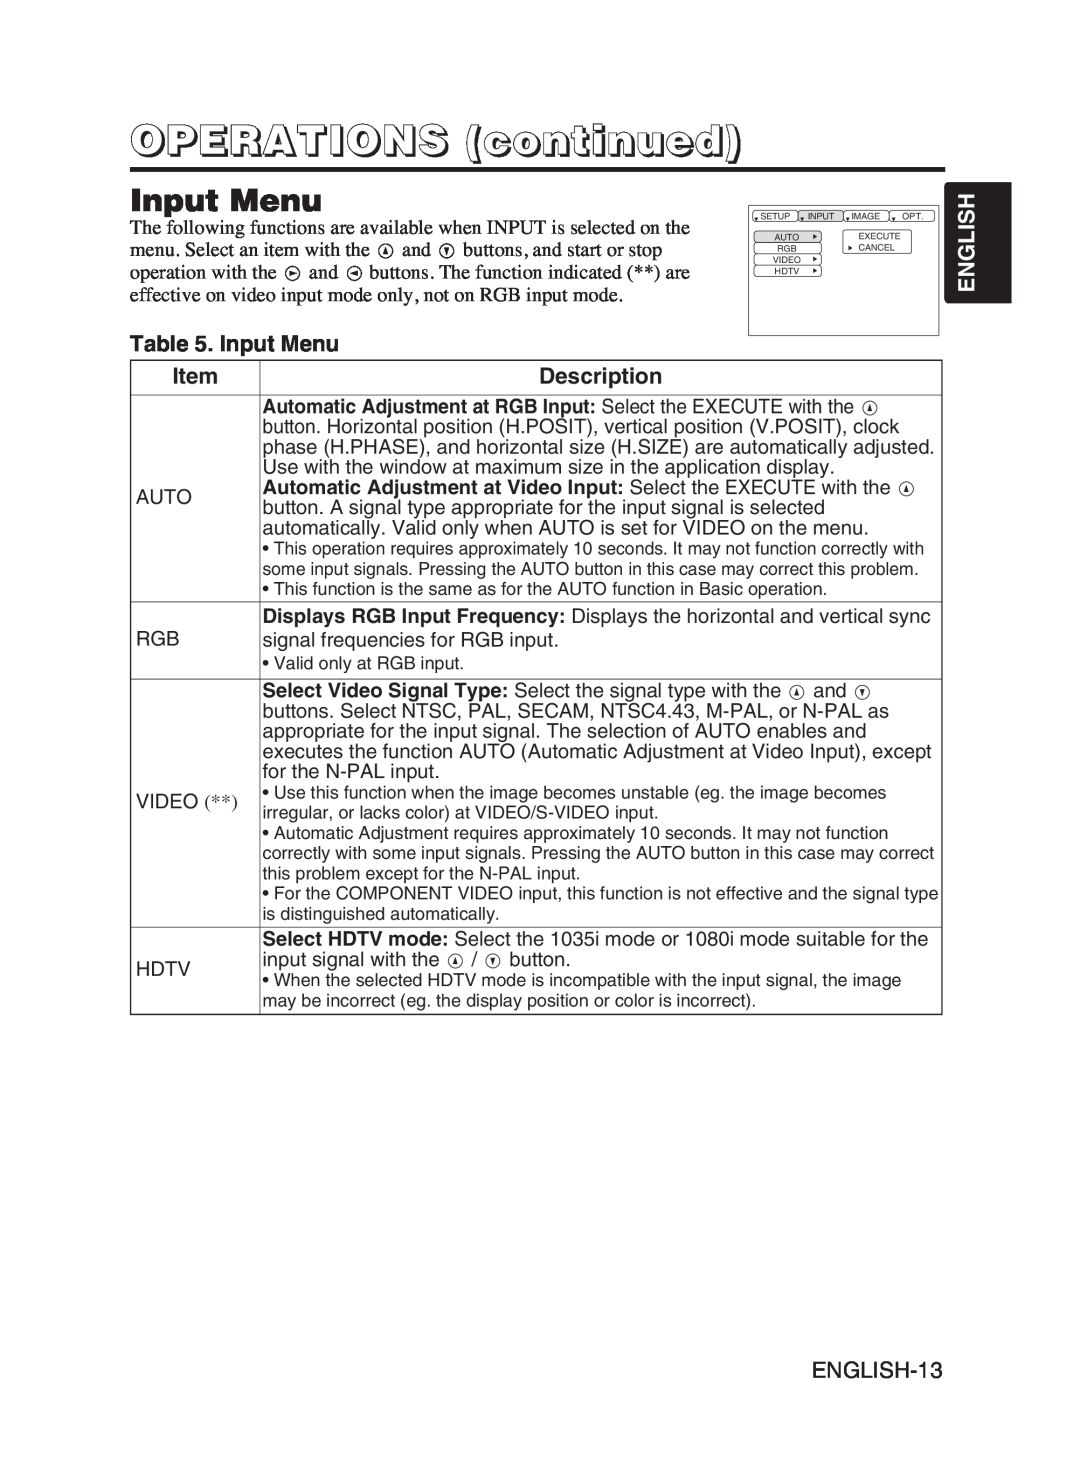 Hitachi CP-S370W user manual Input Menu, OPERATIONS continued, English, Description 